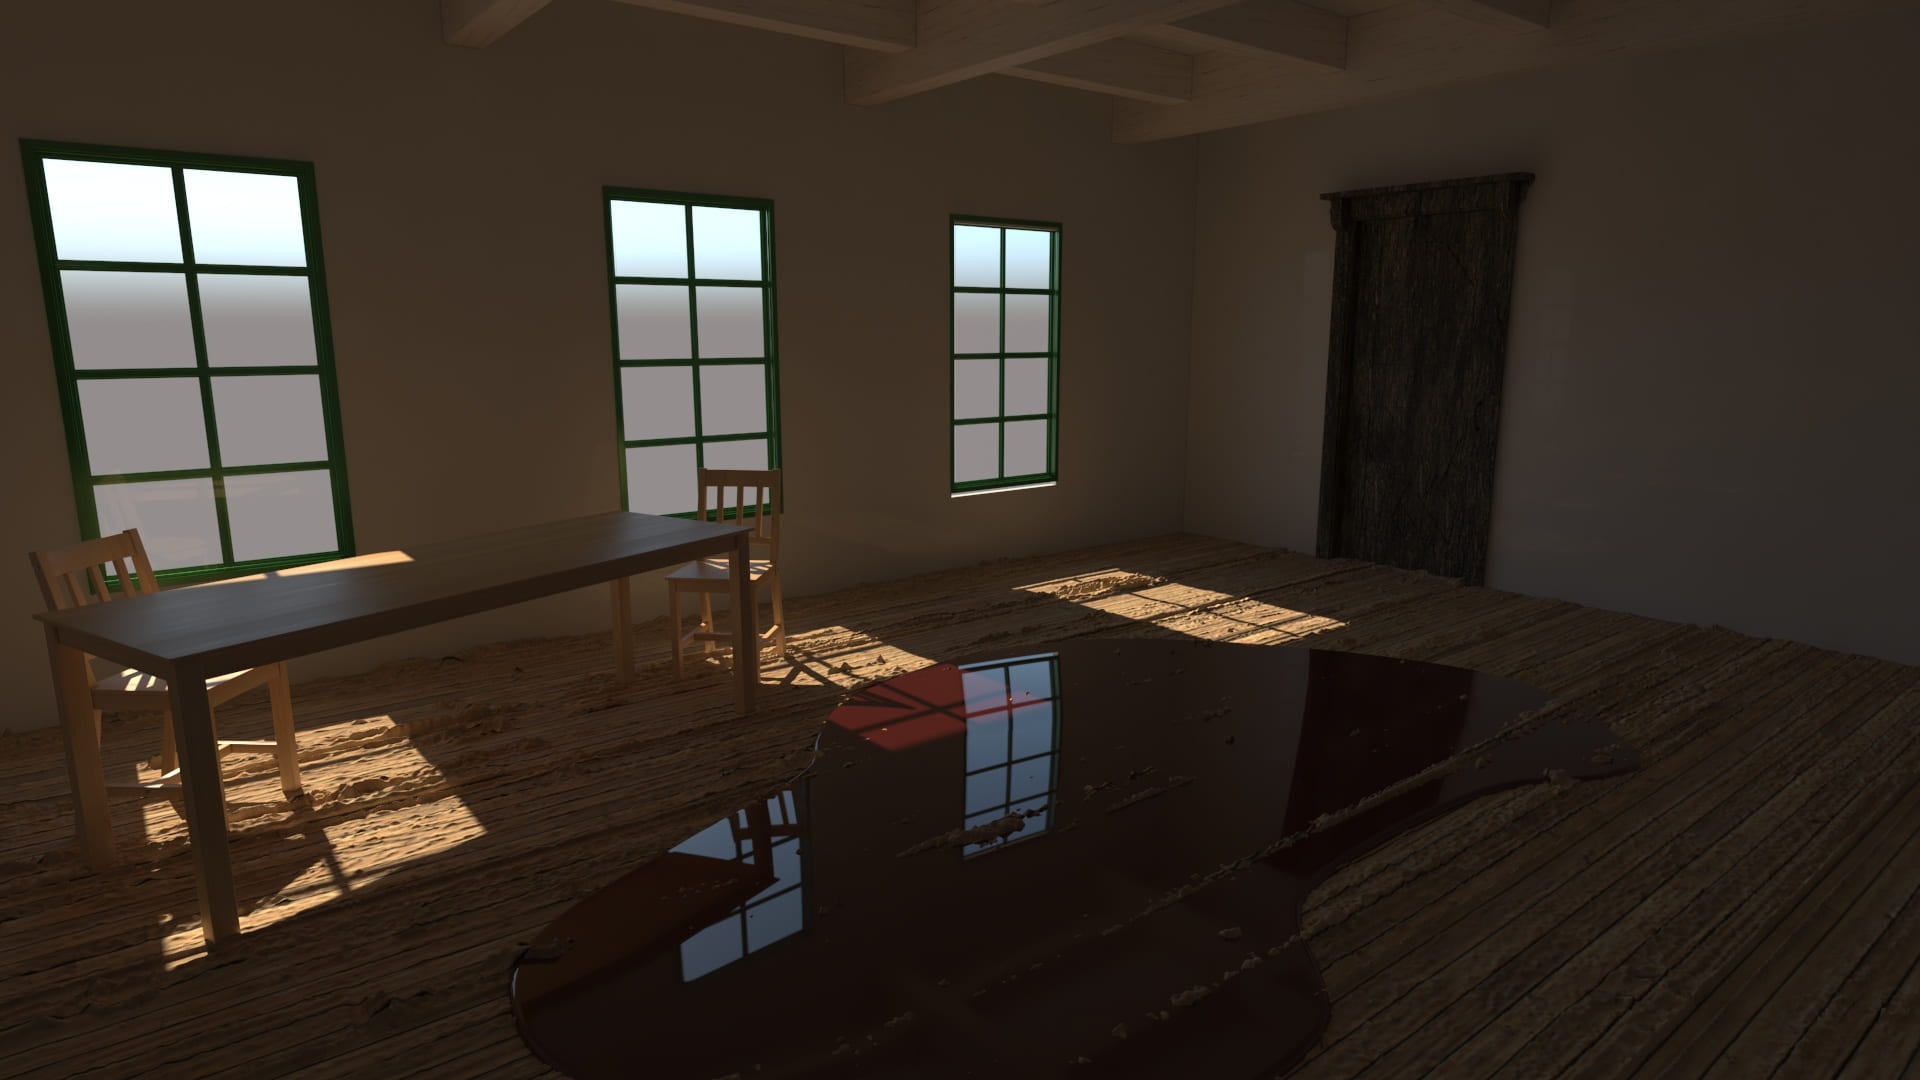 3D model of Van Gogh's studio interior.